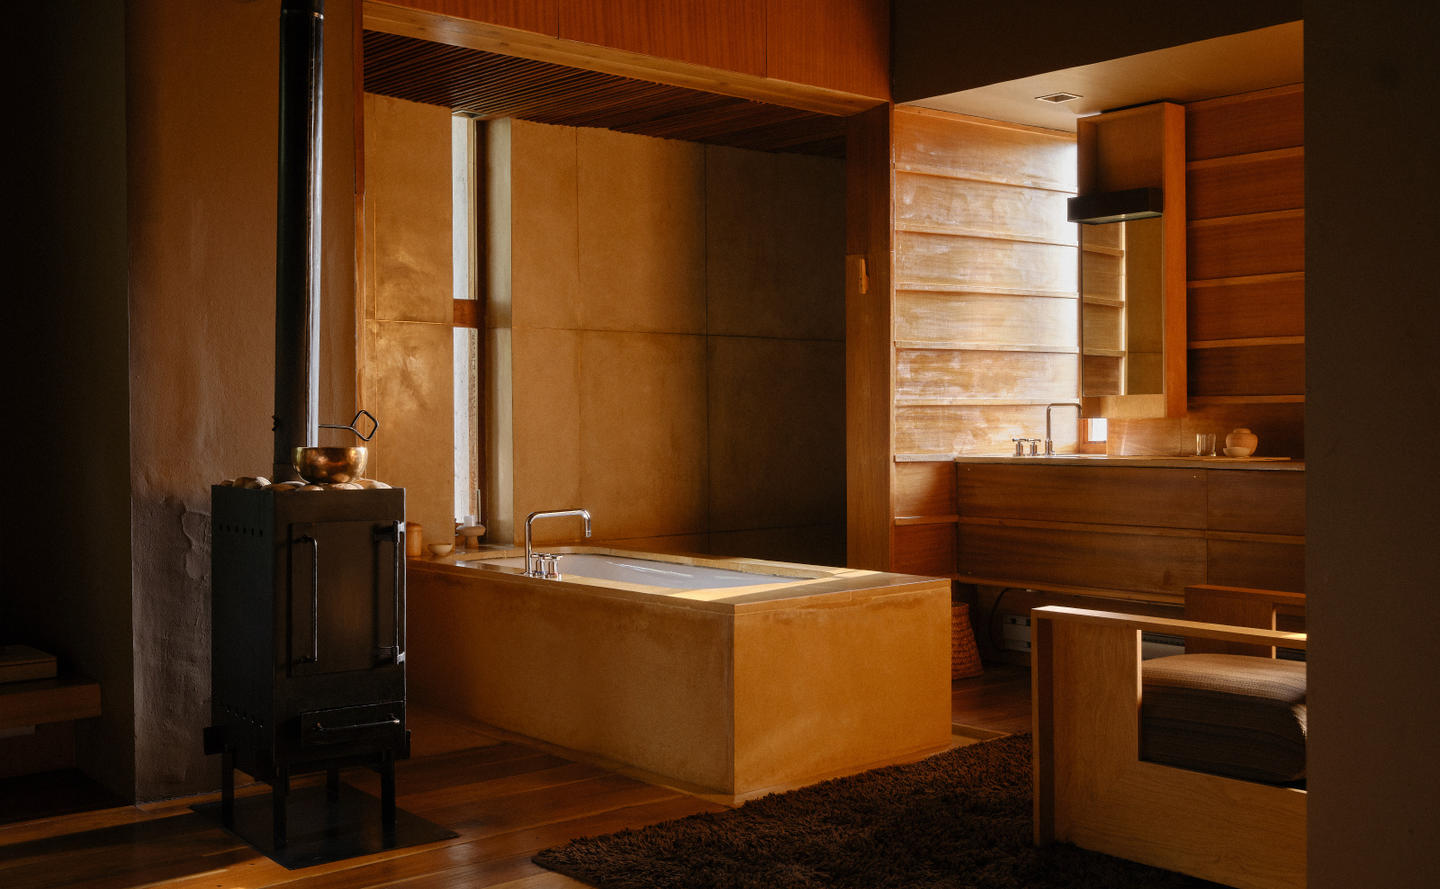 amankora-bhutan-accommodation-thimphu-lodge-suite-bathroom.jpg